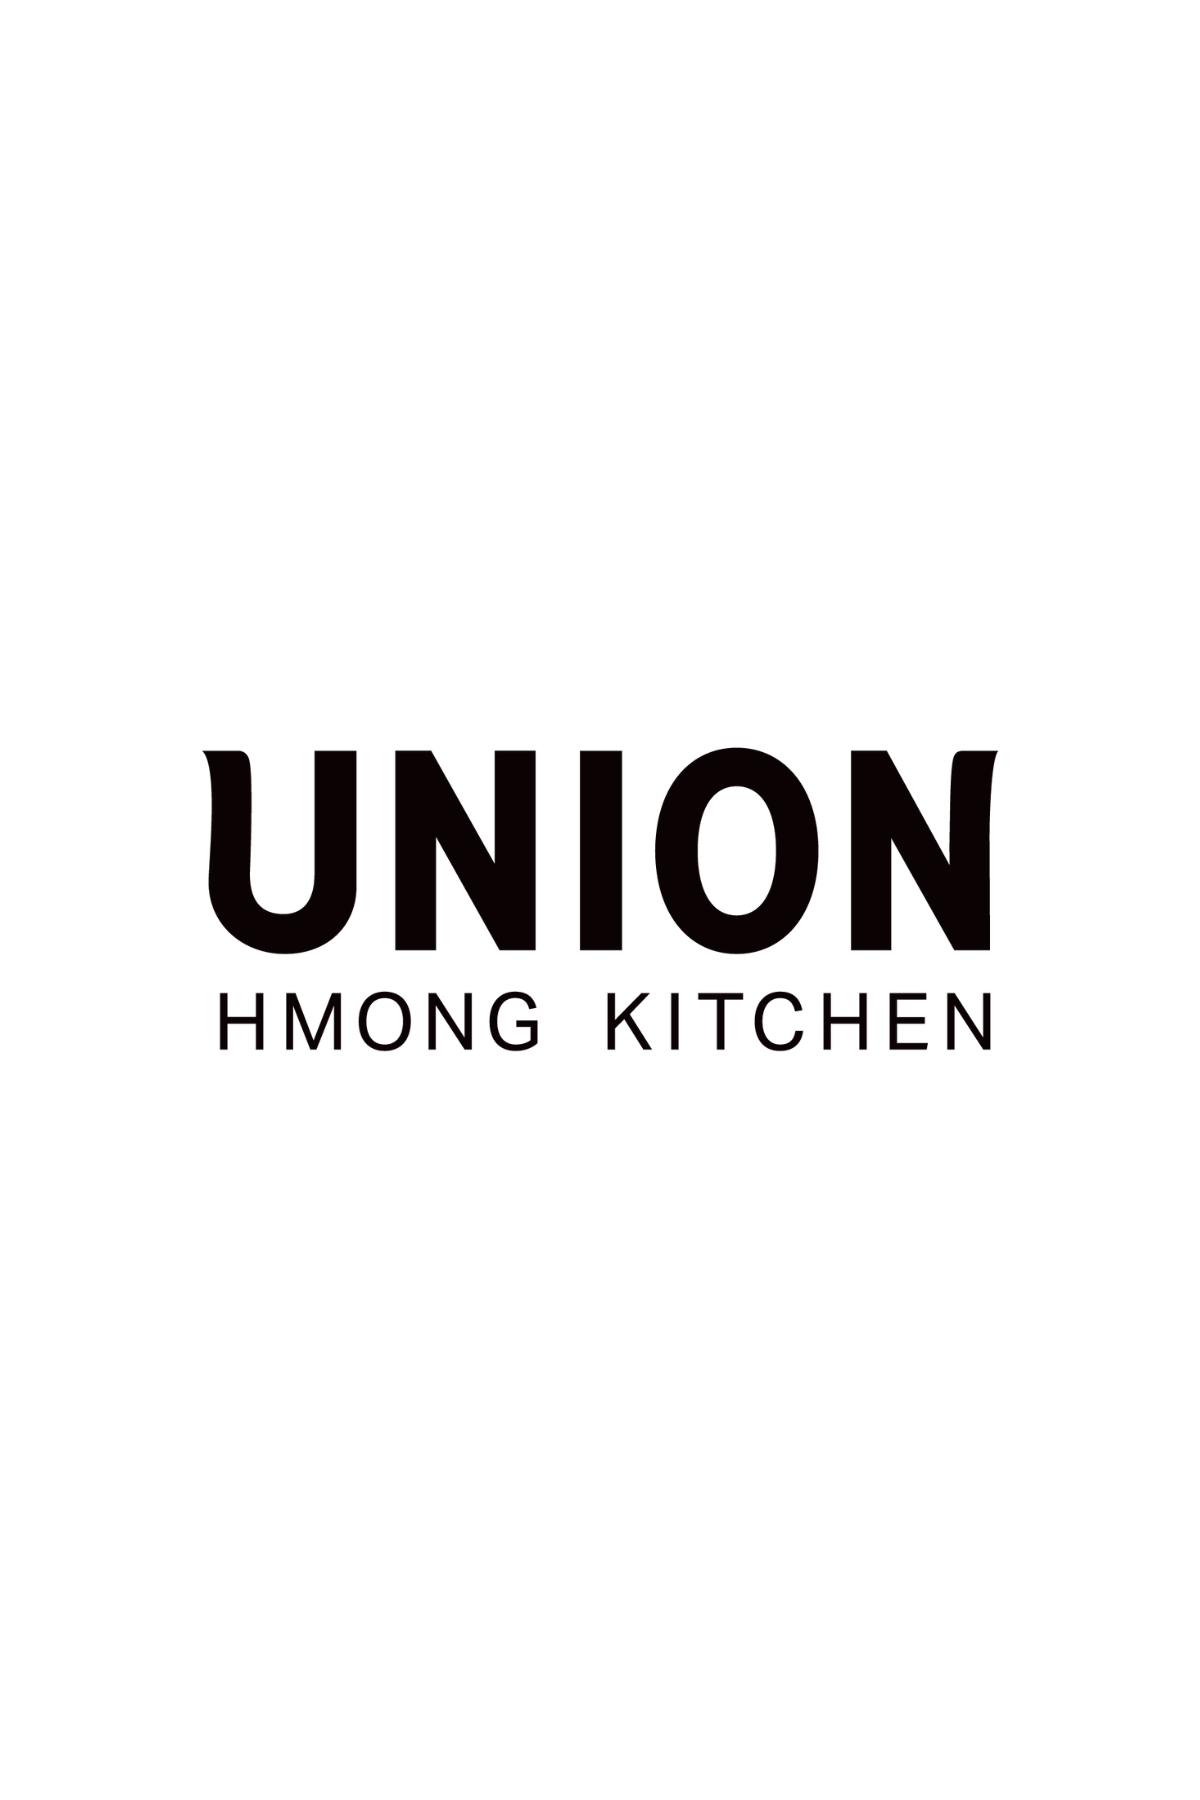 Union Hmong Kitchen